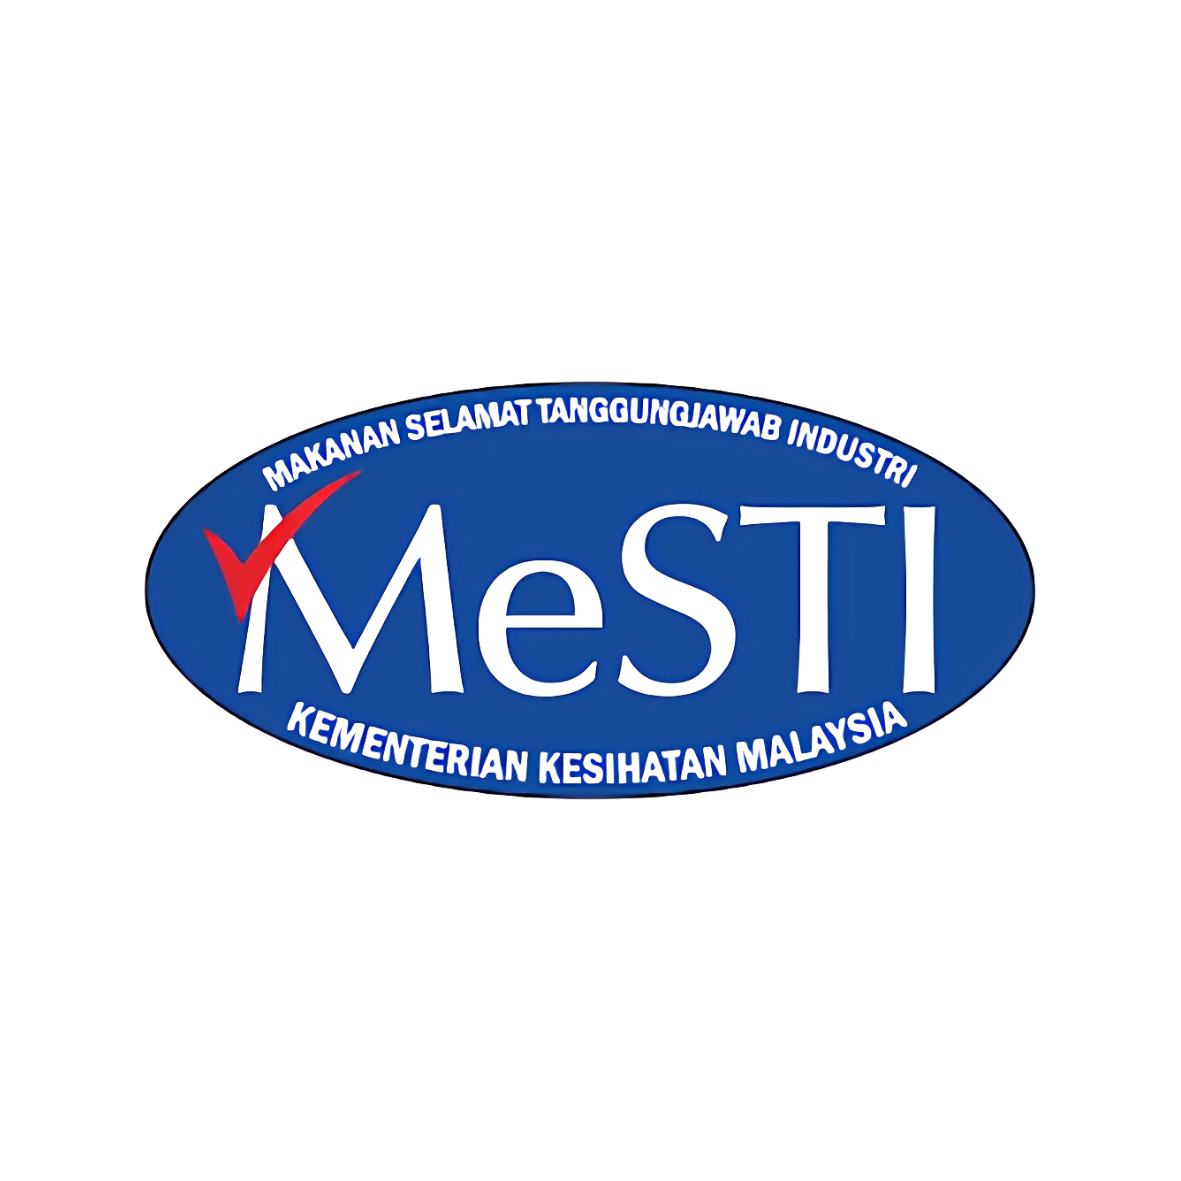 MeSTI certification